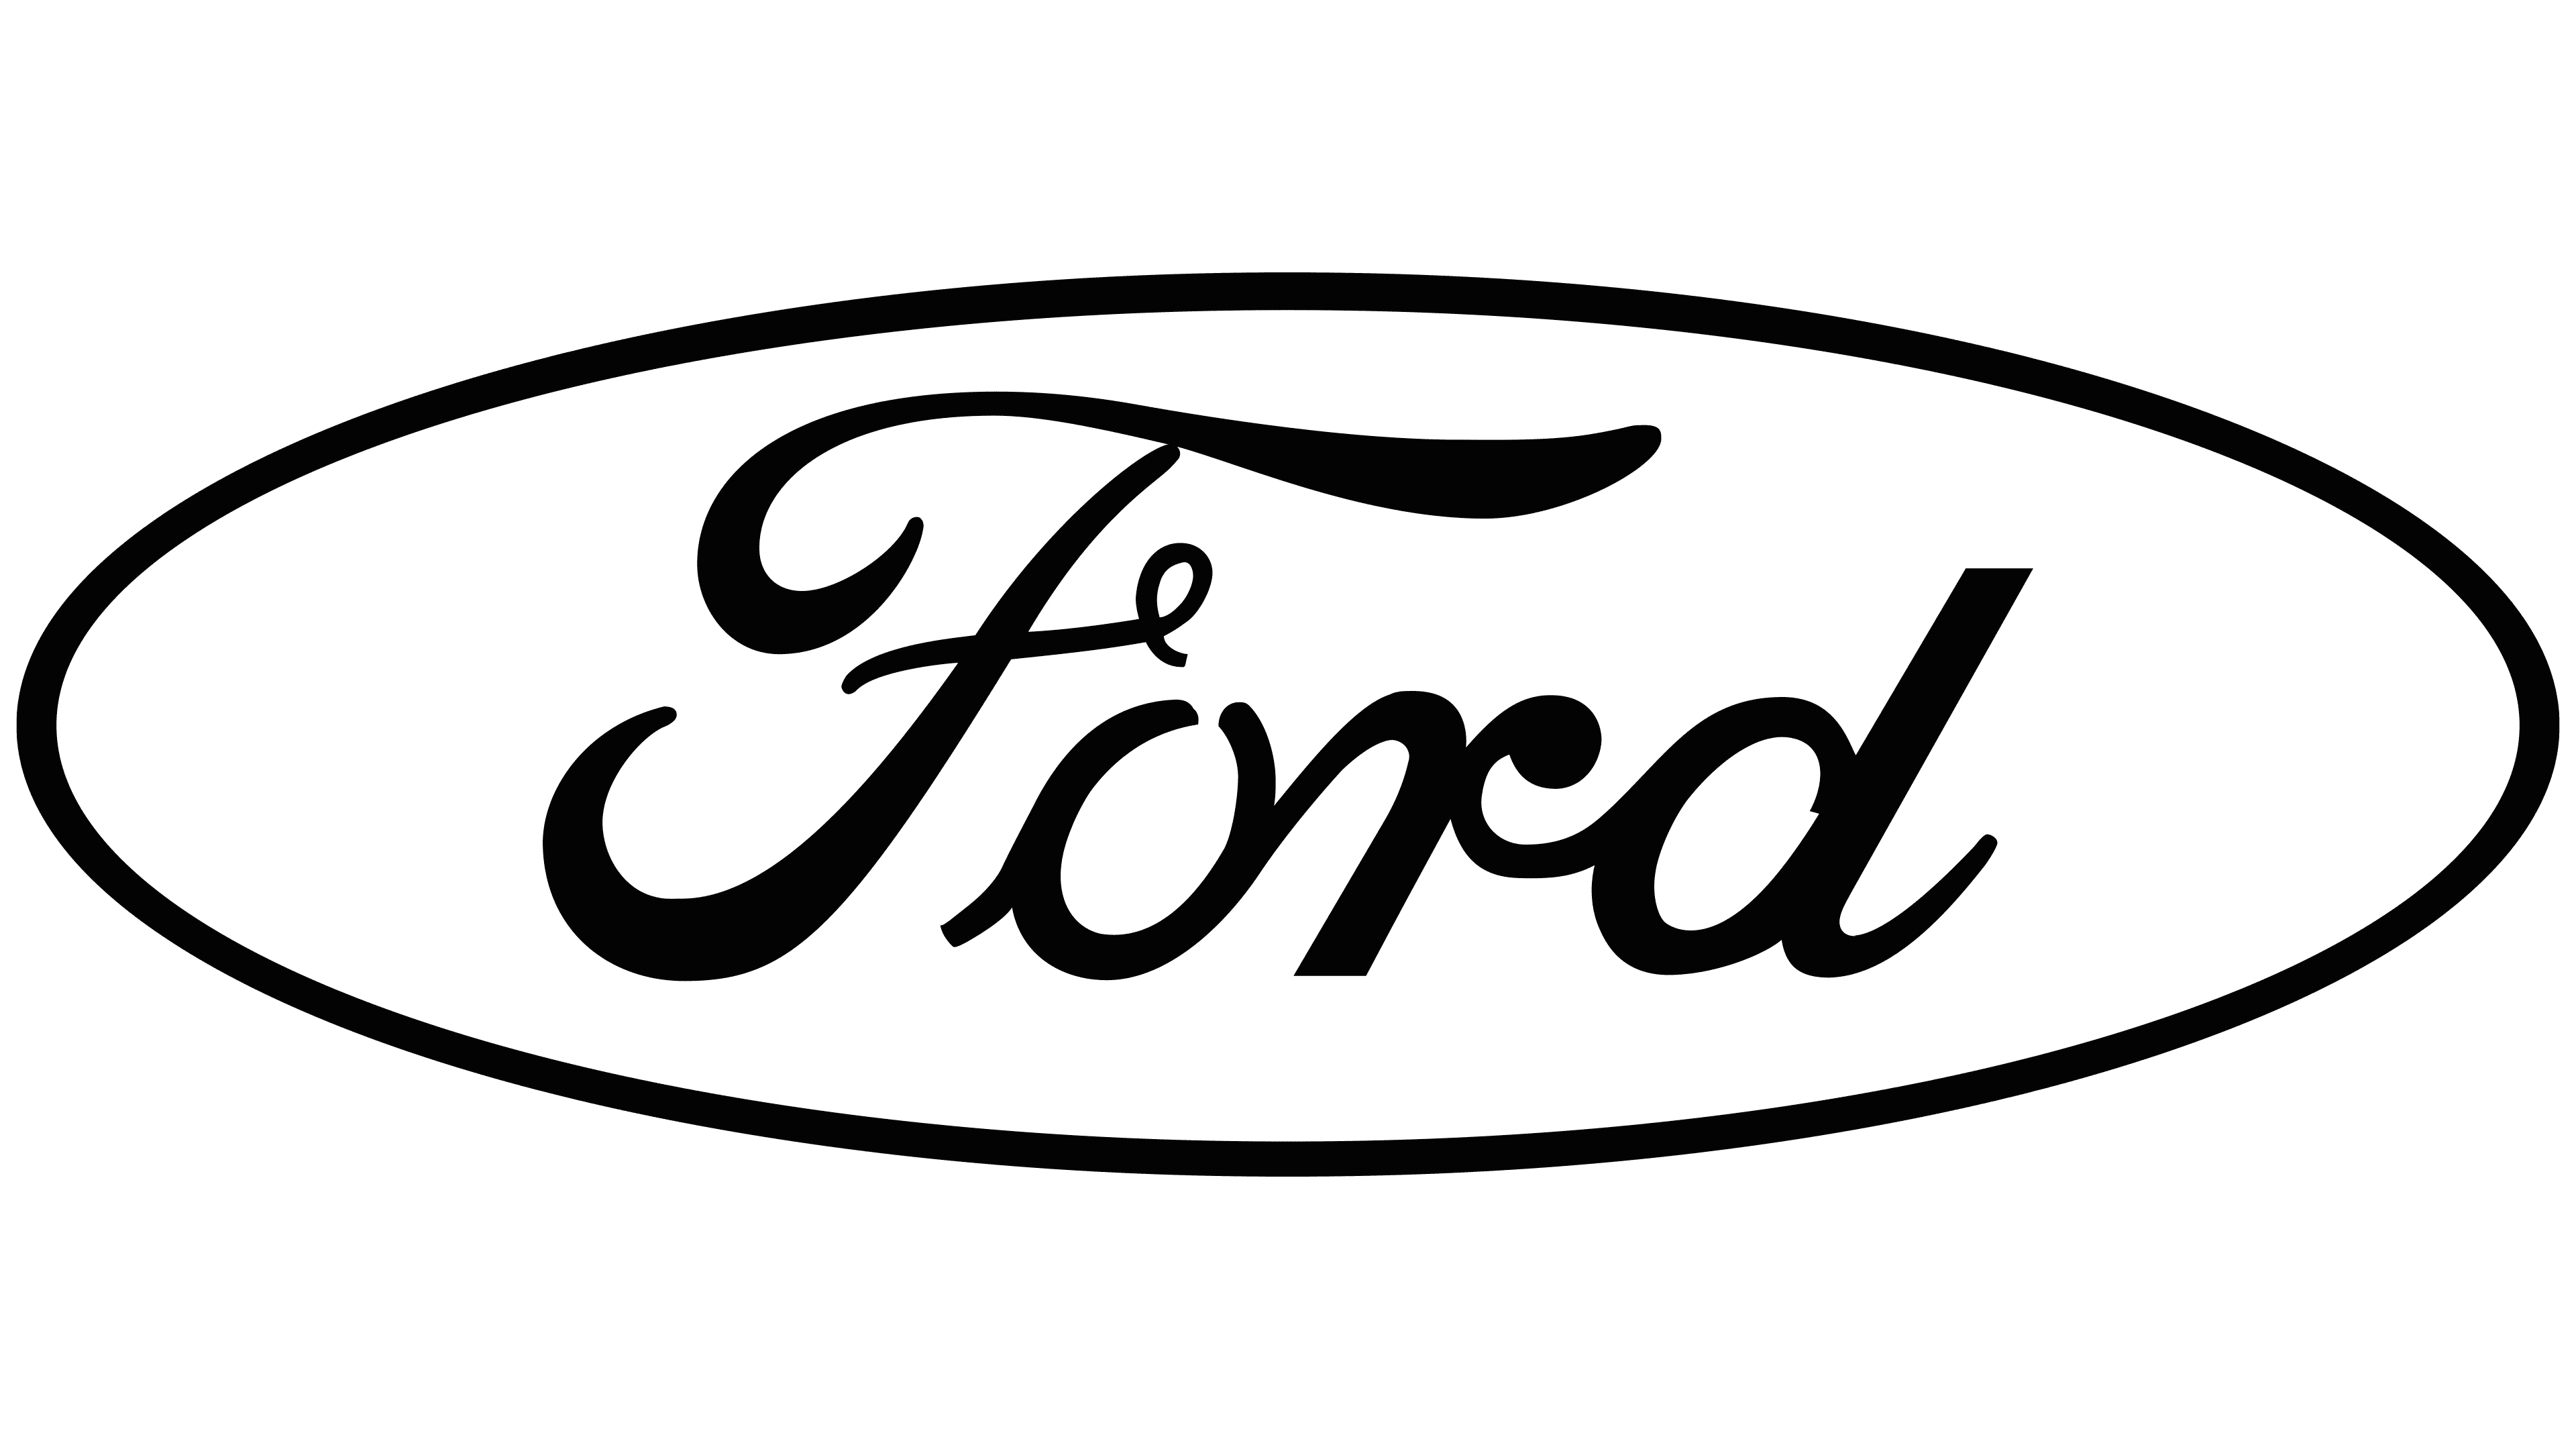 green ford emblem